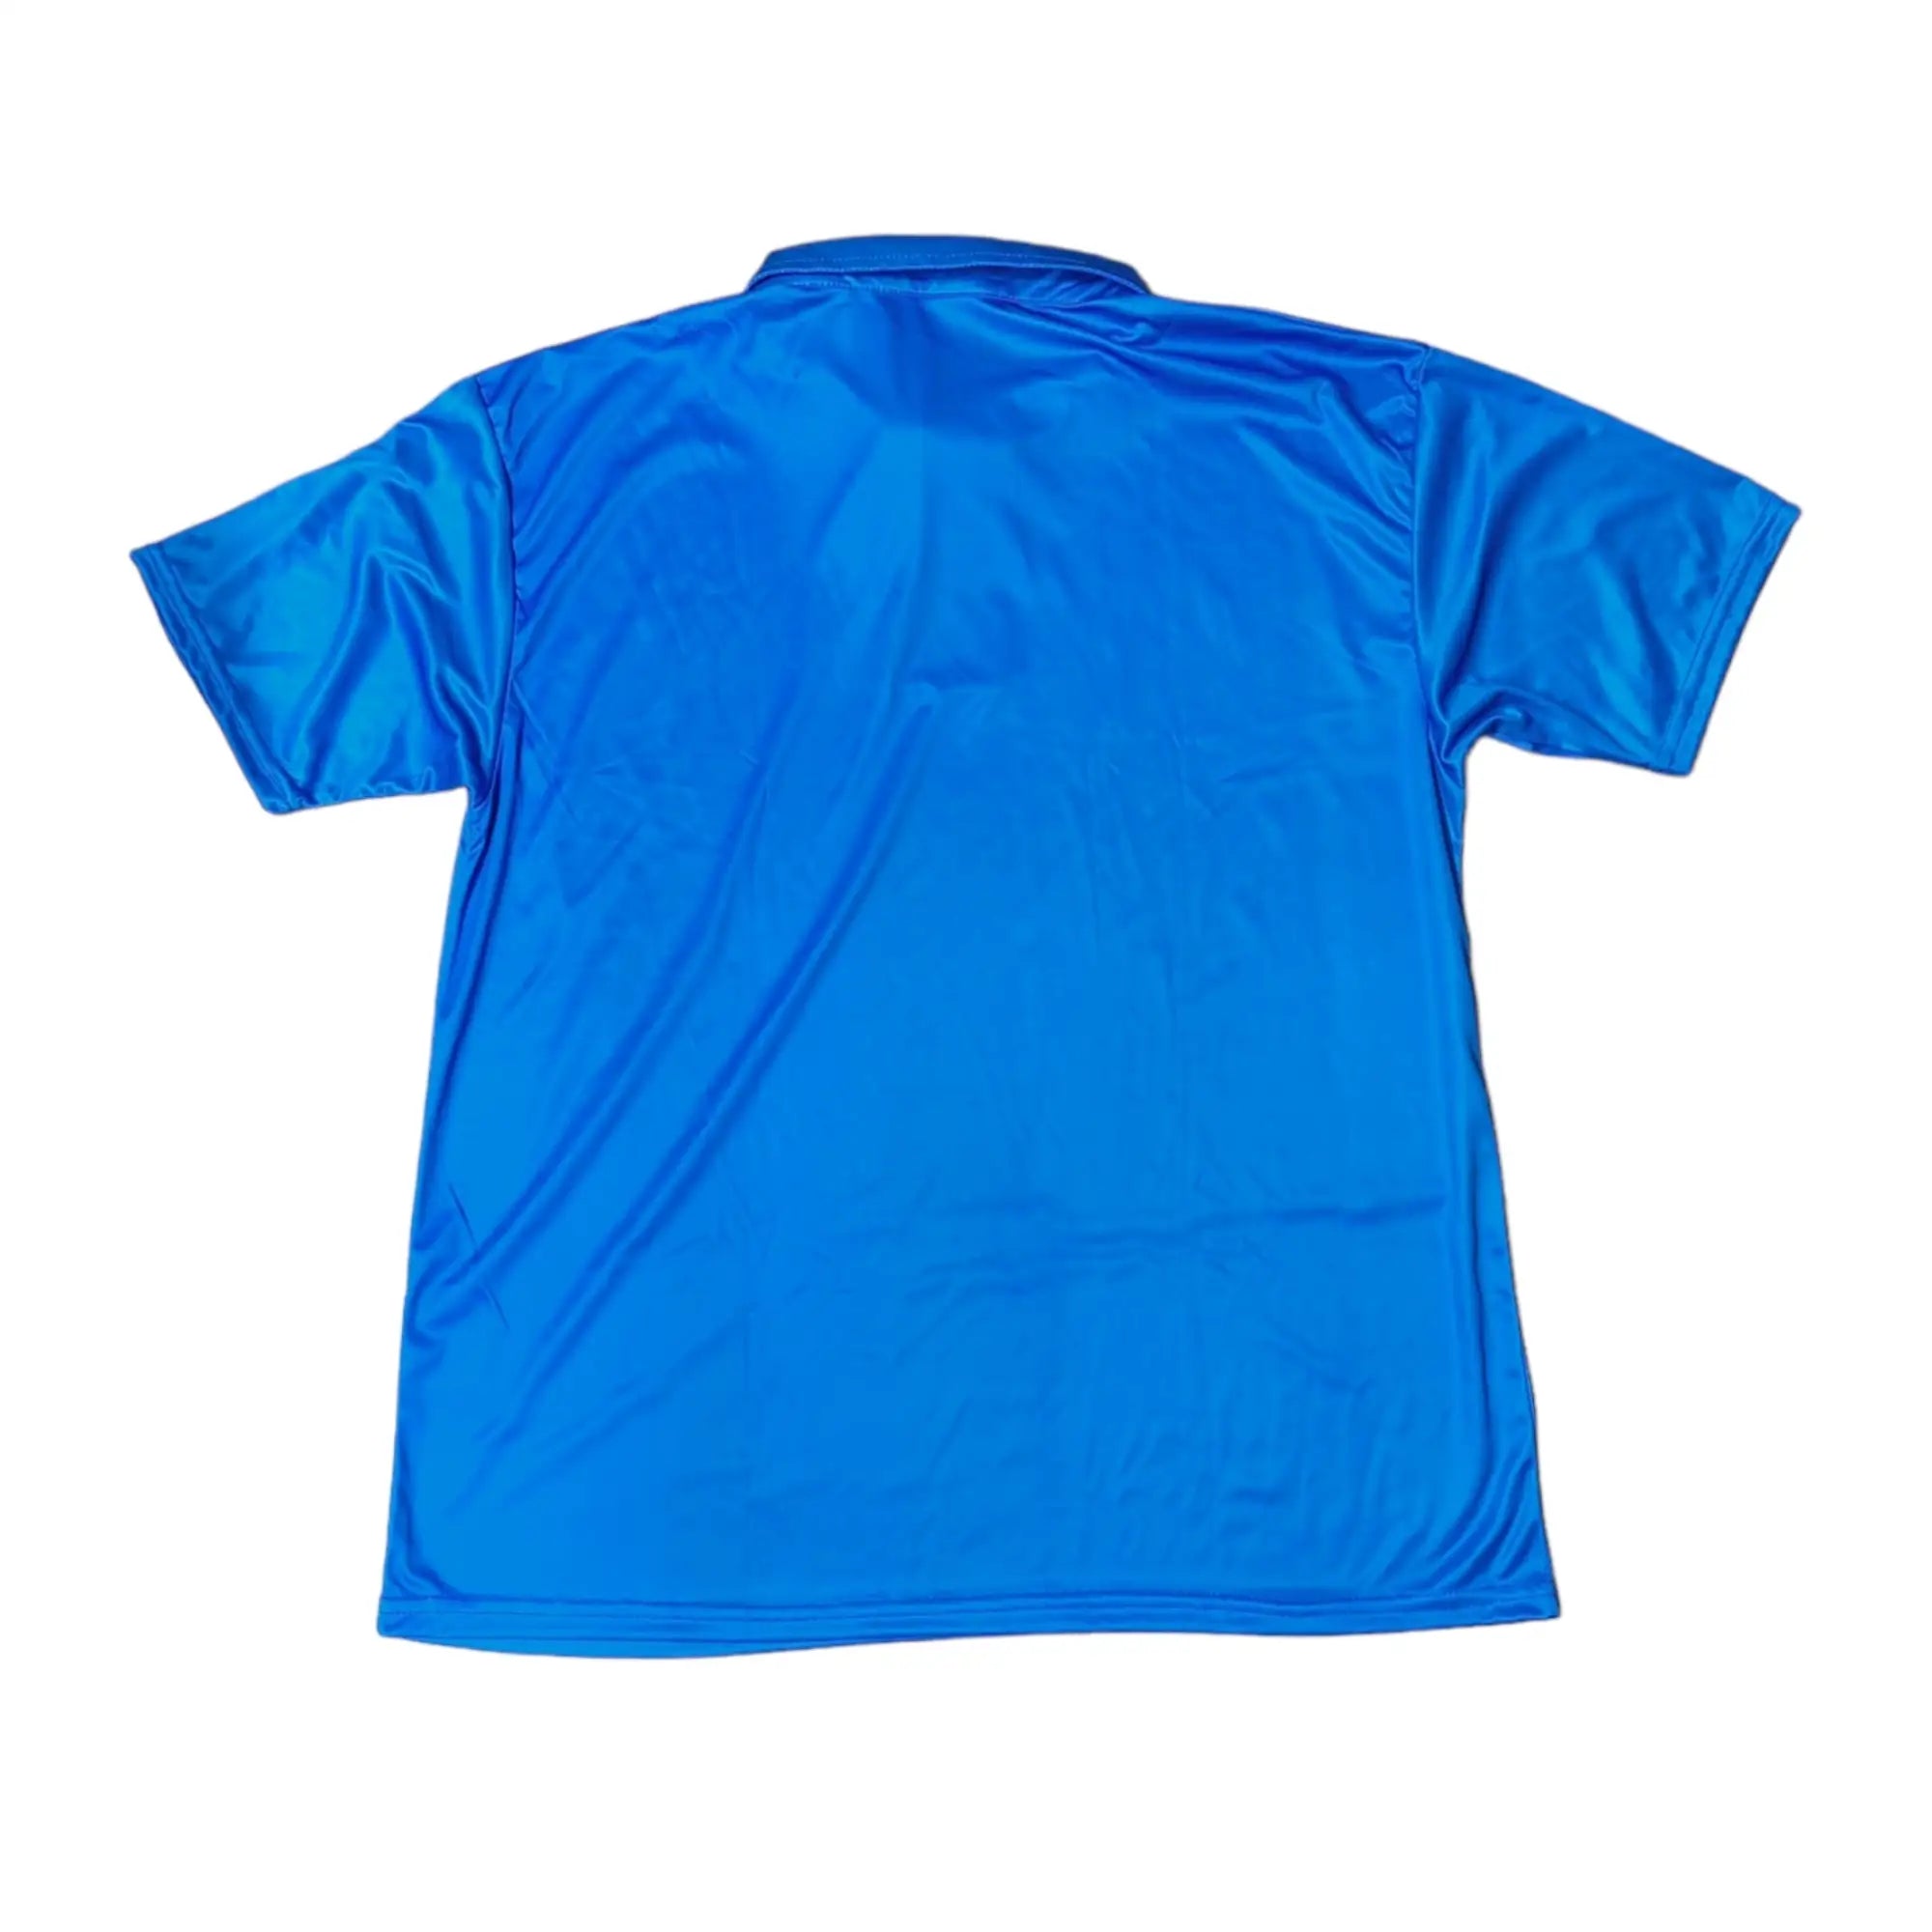 West Indies Cricket Team Royal Blue Shirt Replica - Team Shirt